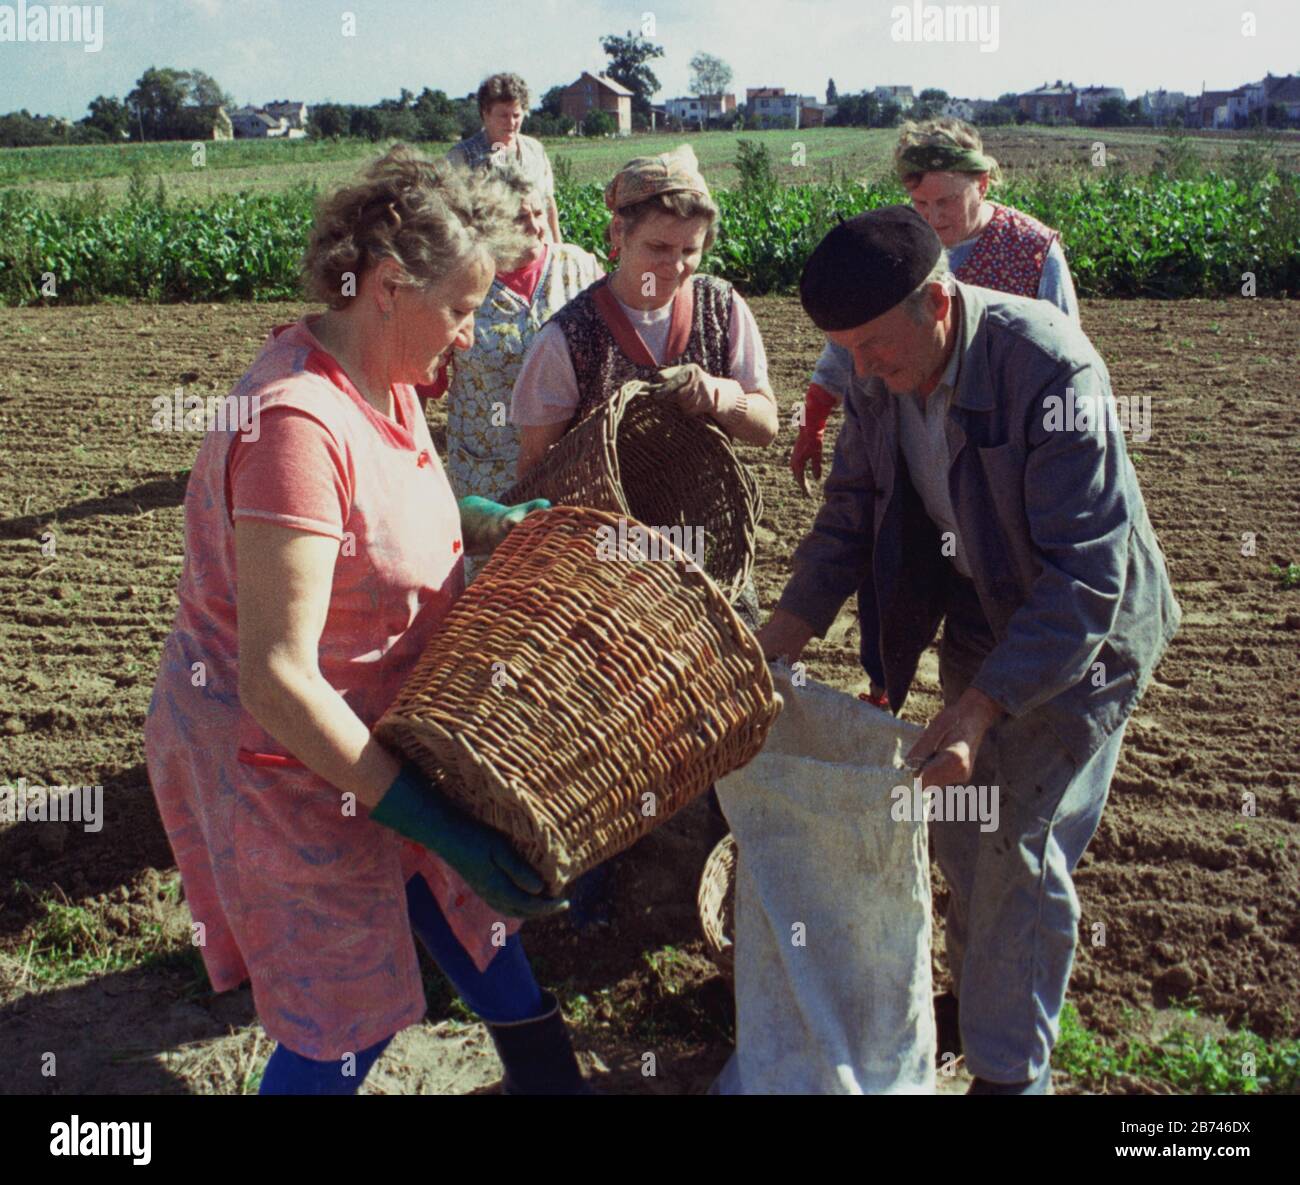 01 January 1993, Poland, Polen: Members of the German-speaking minority in Upper Silesia/Poland harvesting potatoes in the fields. Photo: Paul Glaser/dpa-Zentralbild/ZB Stock Photo